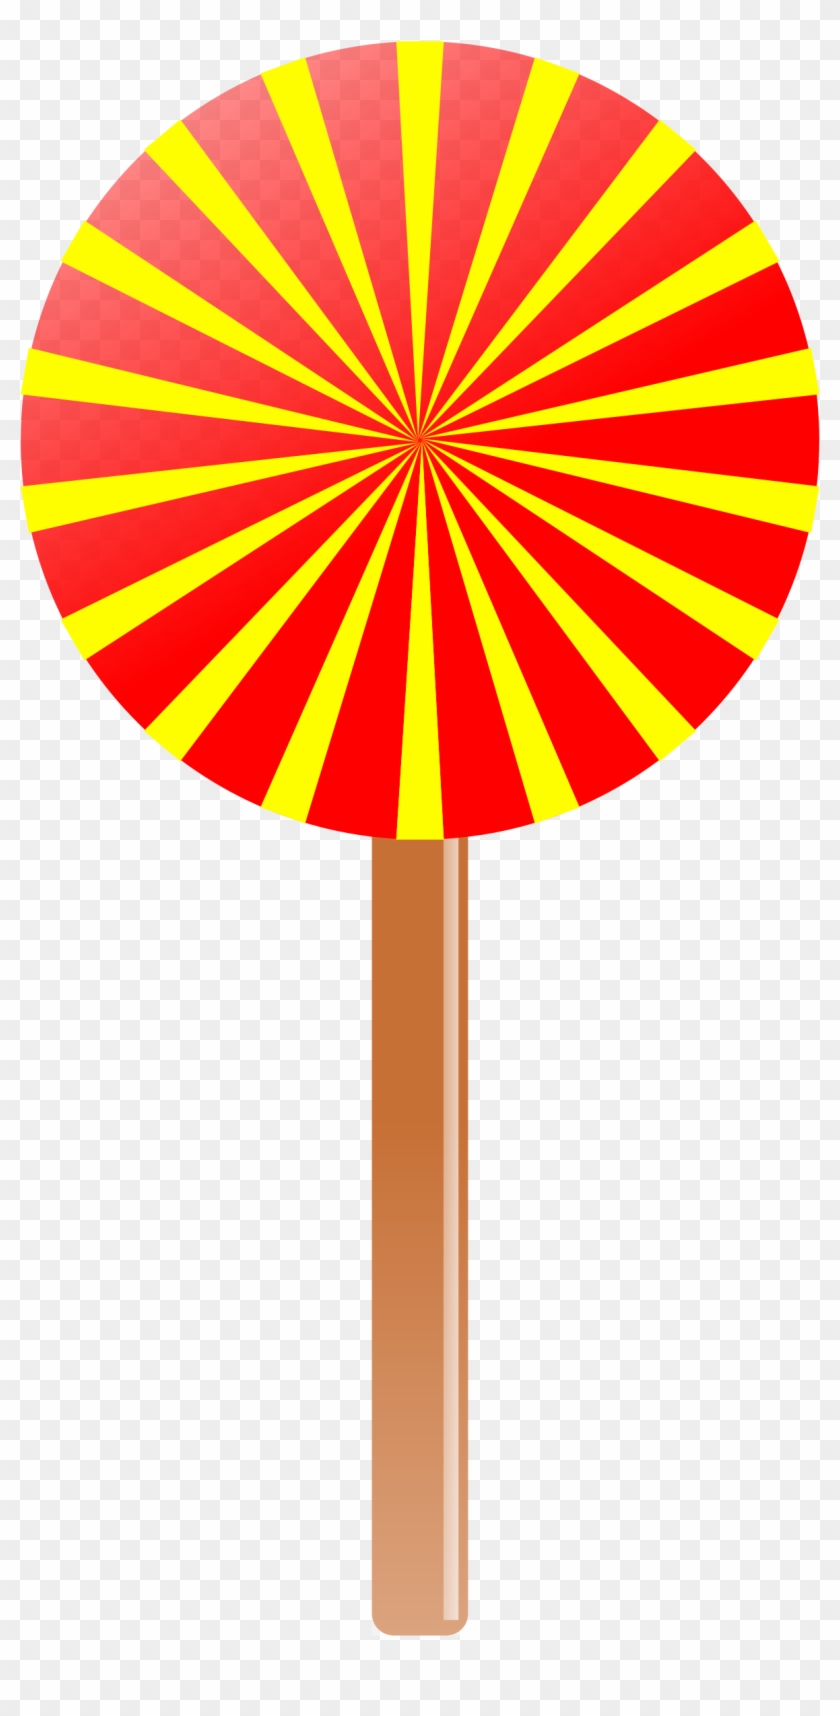 Lolly Pop Clip Art - Lollipop Clip Art #172259